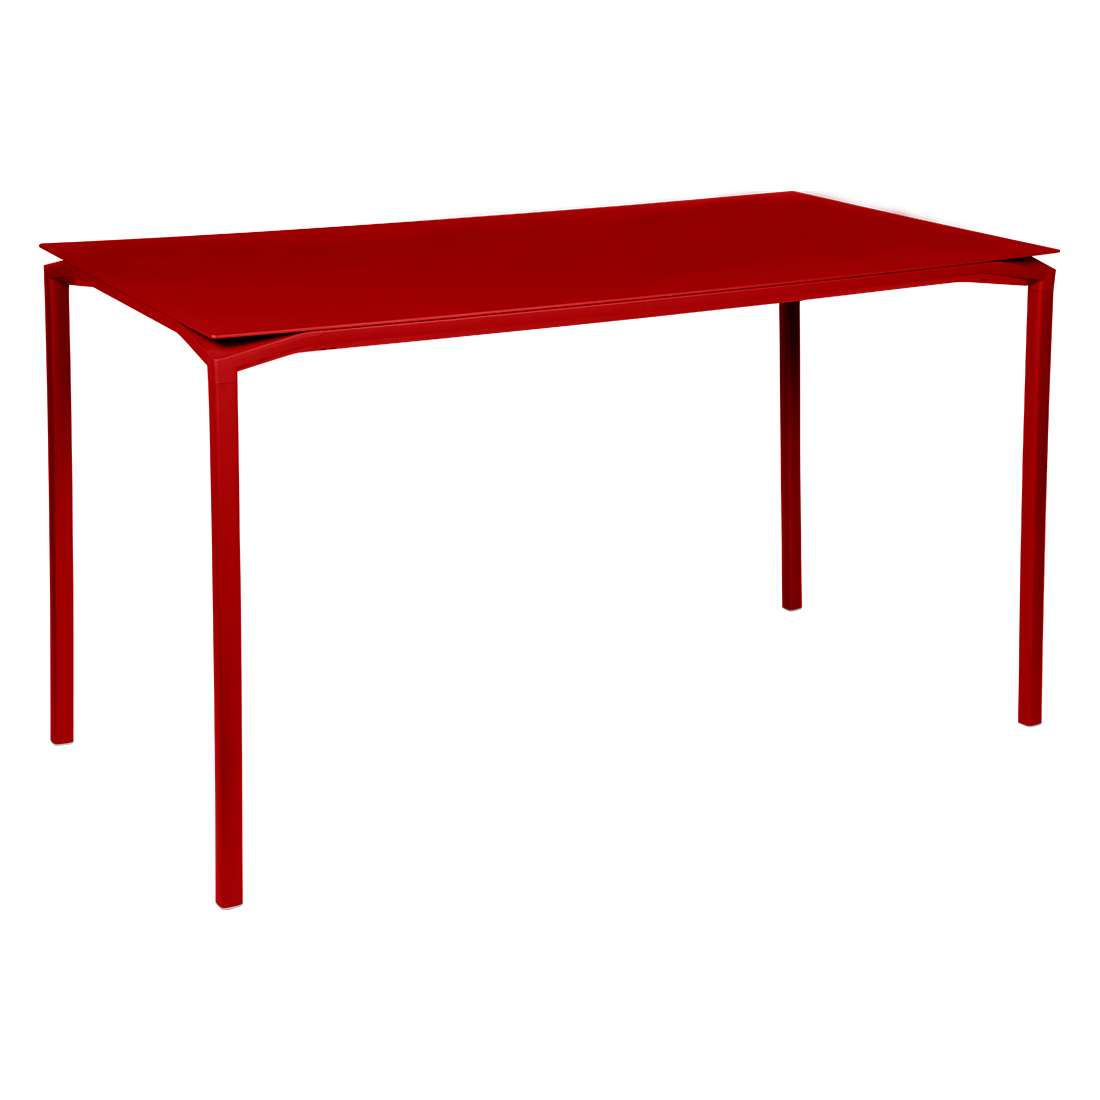 Calvi High Table 160 x 80